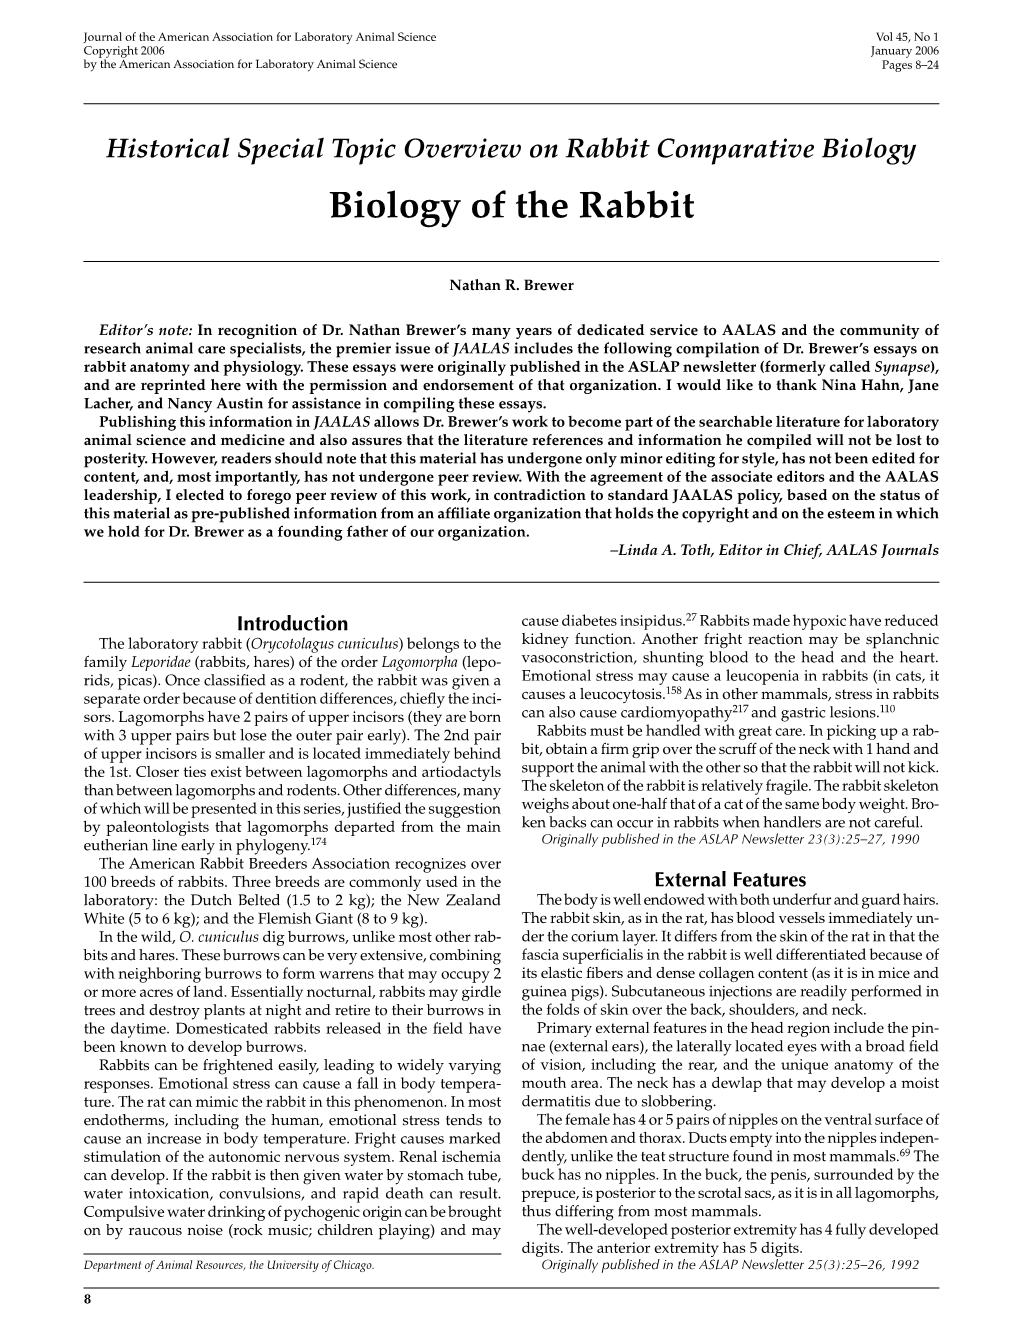 Biology of the Rabbit